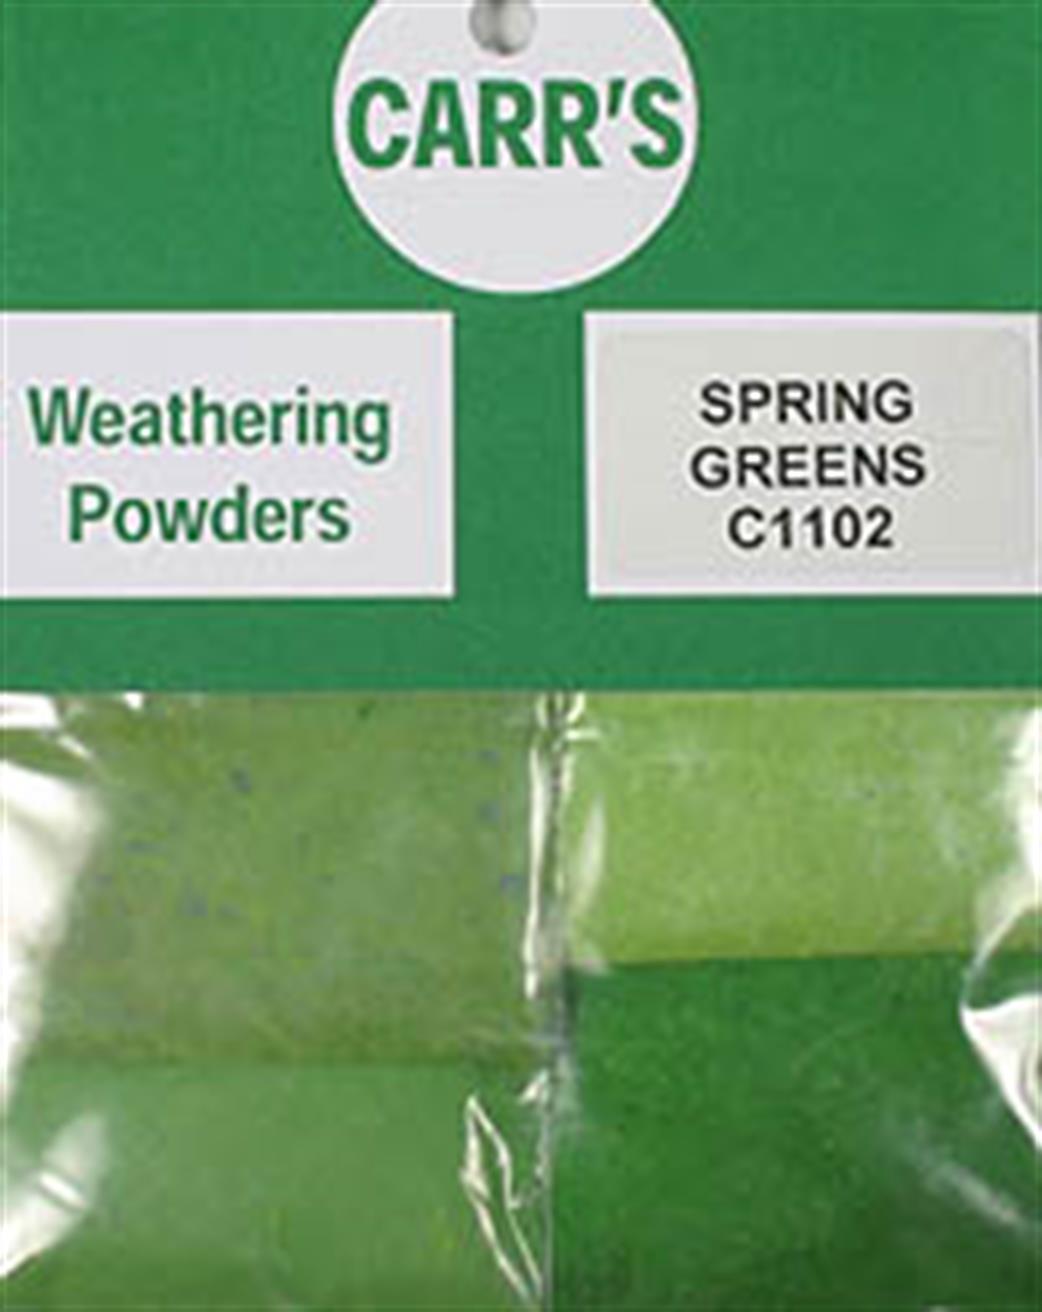 Carrs  C1102 Spring Greens Weathering Powders